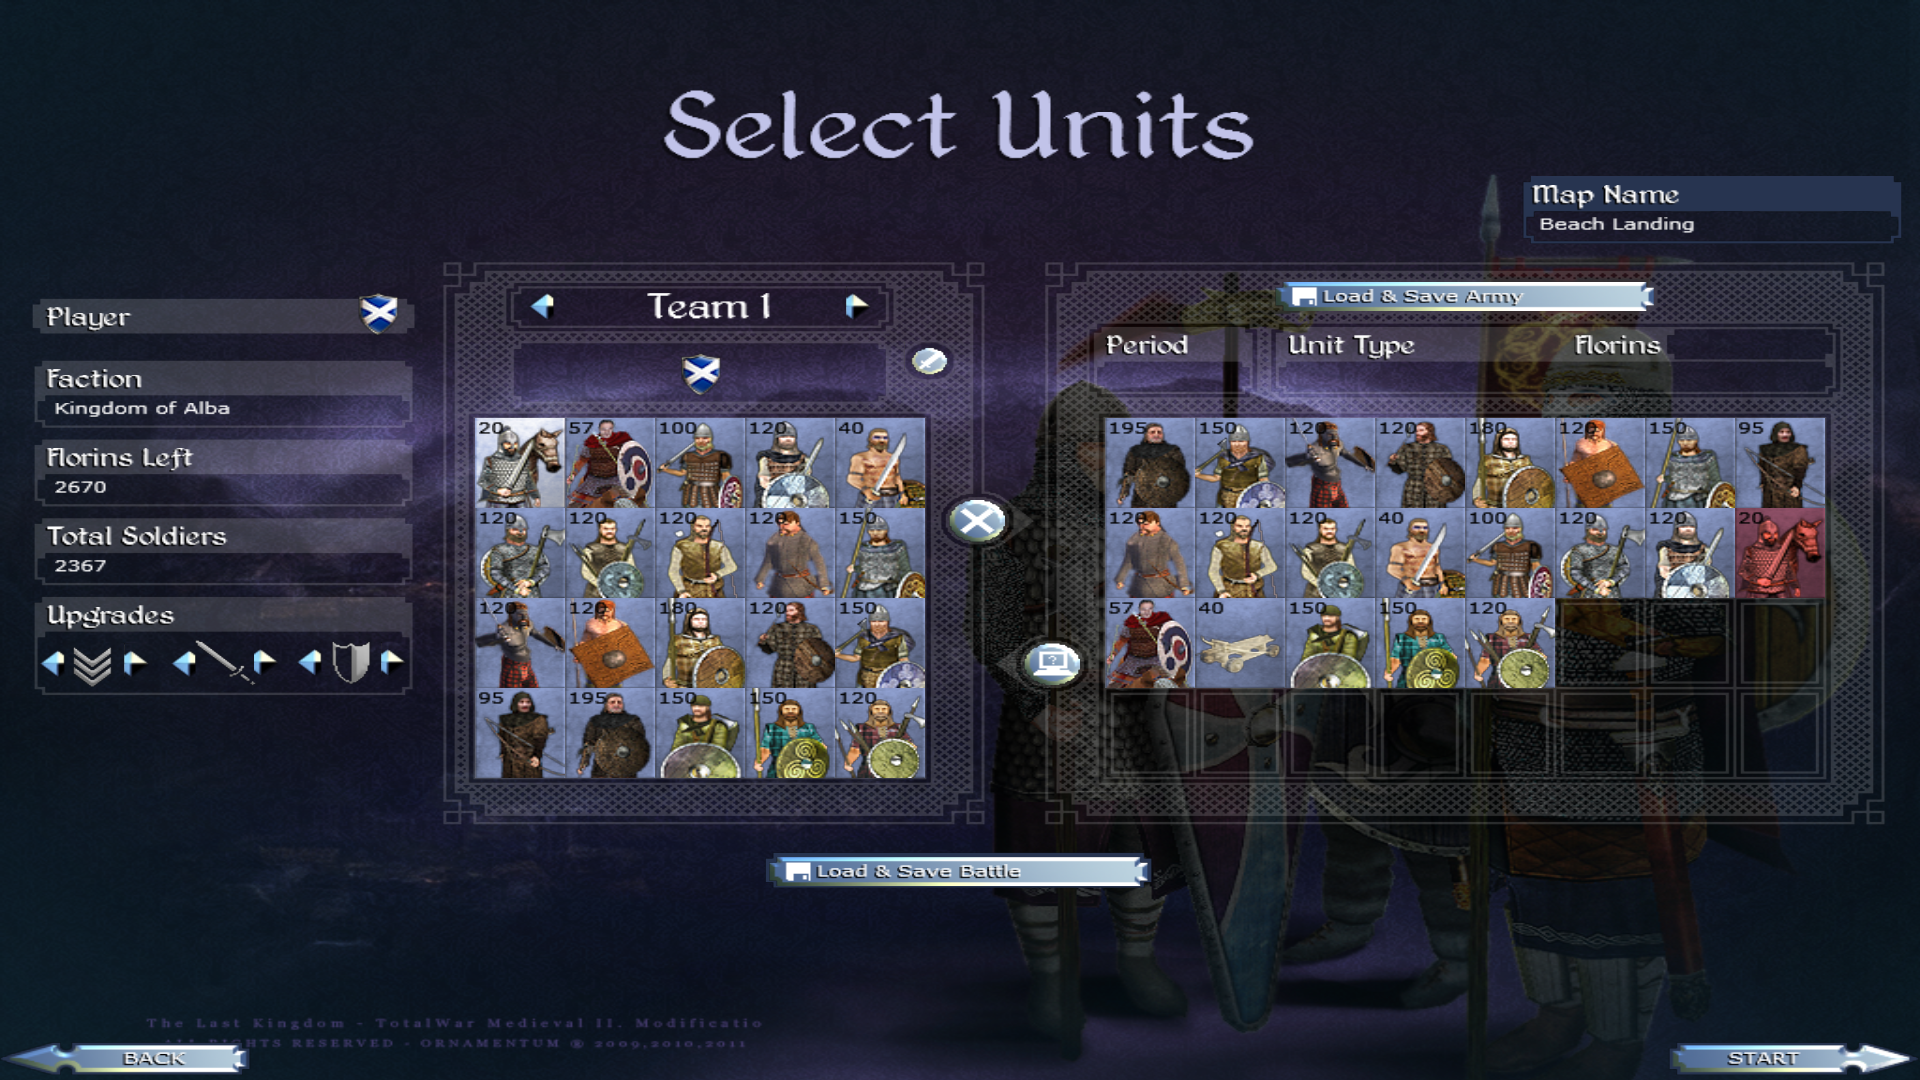 Kingdom of Alba updated roster - Six new units!